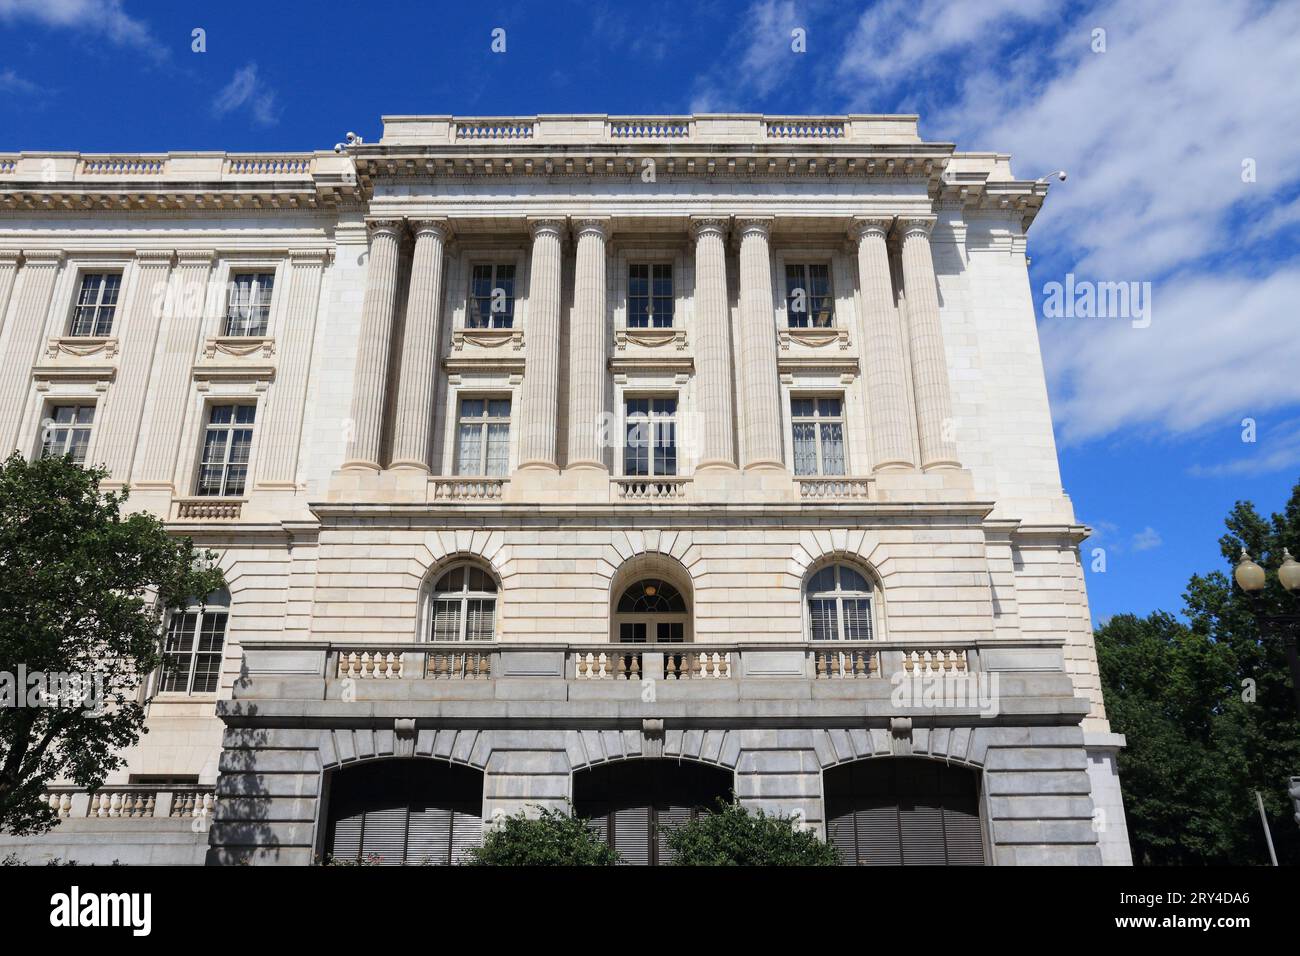 US Senate in Washington D.C. Russell Senate Office Building. Stock Photo